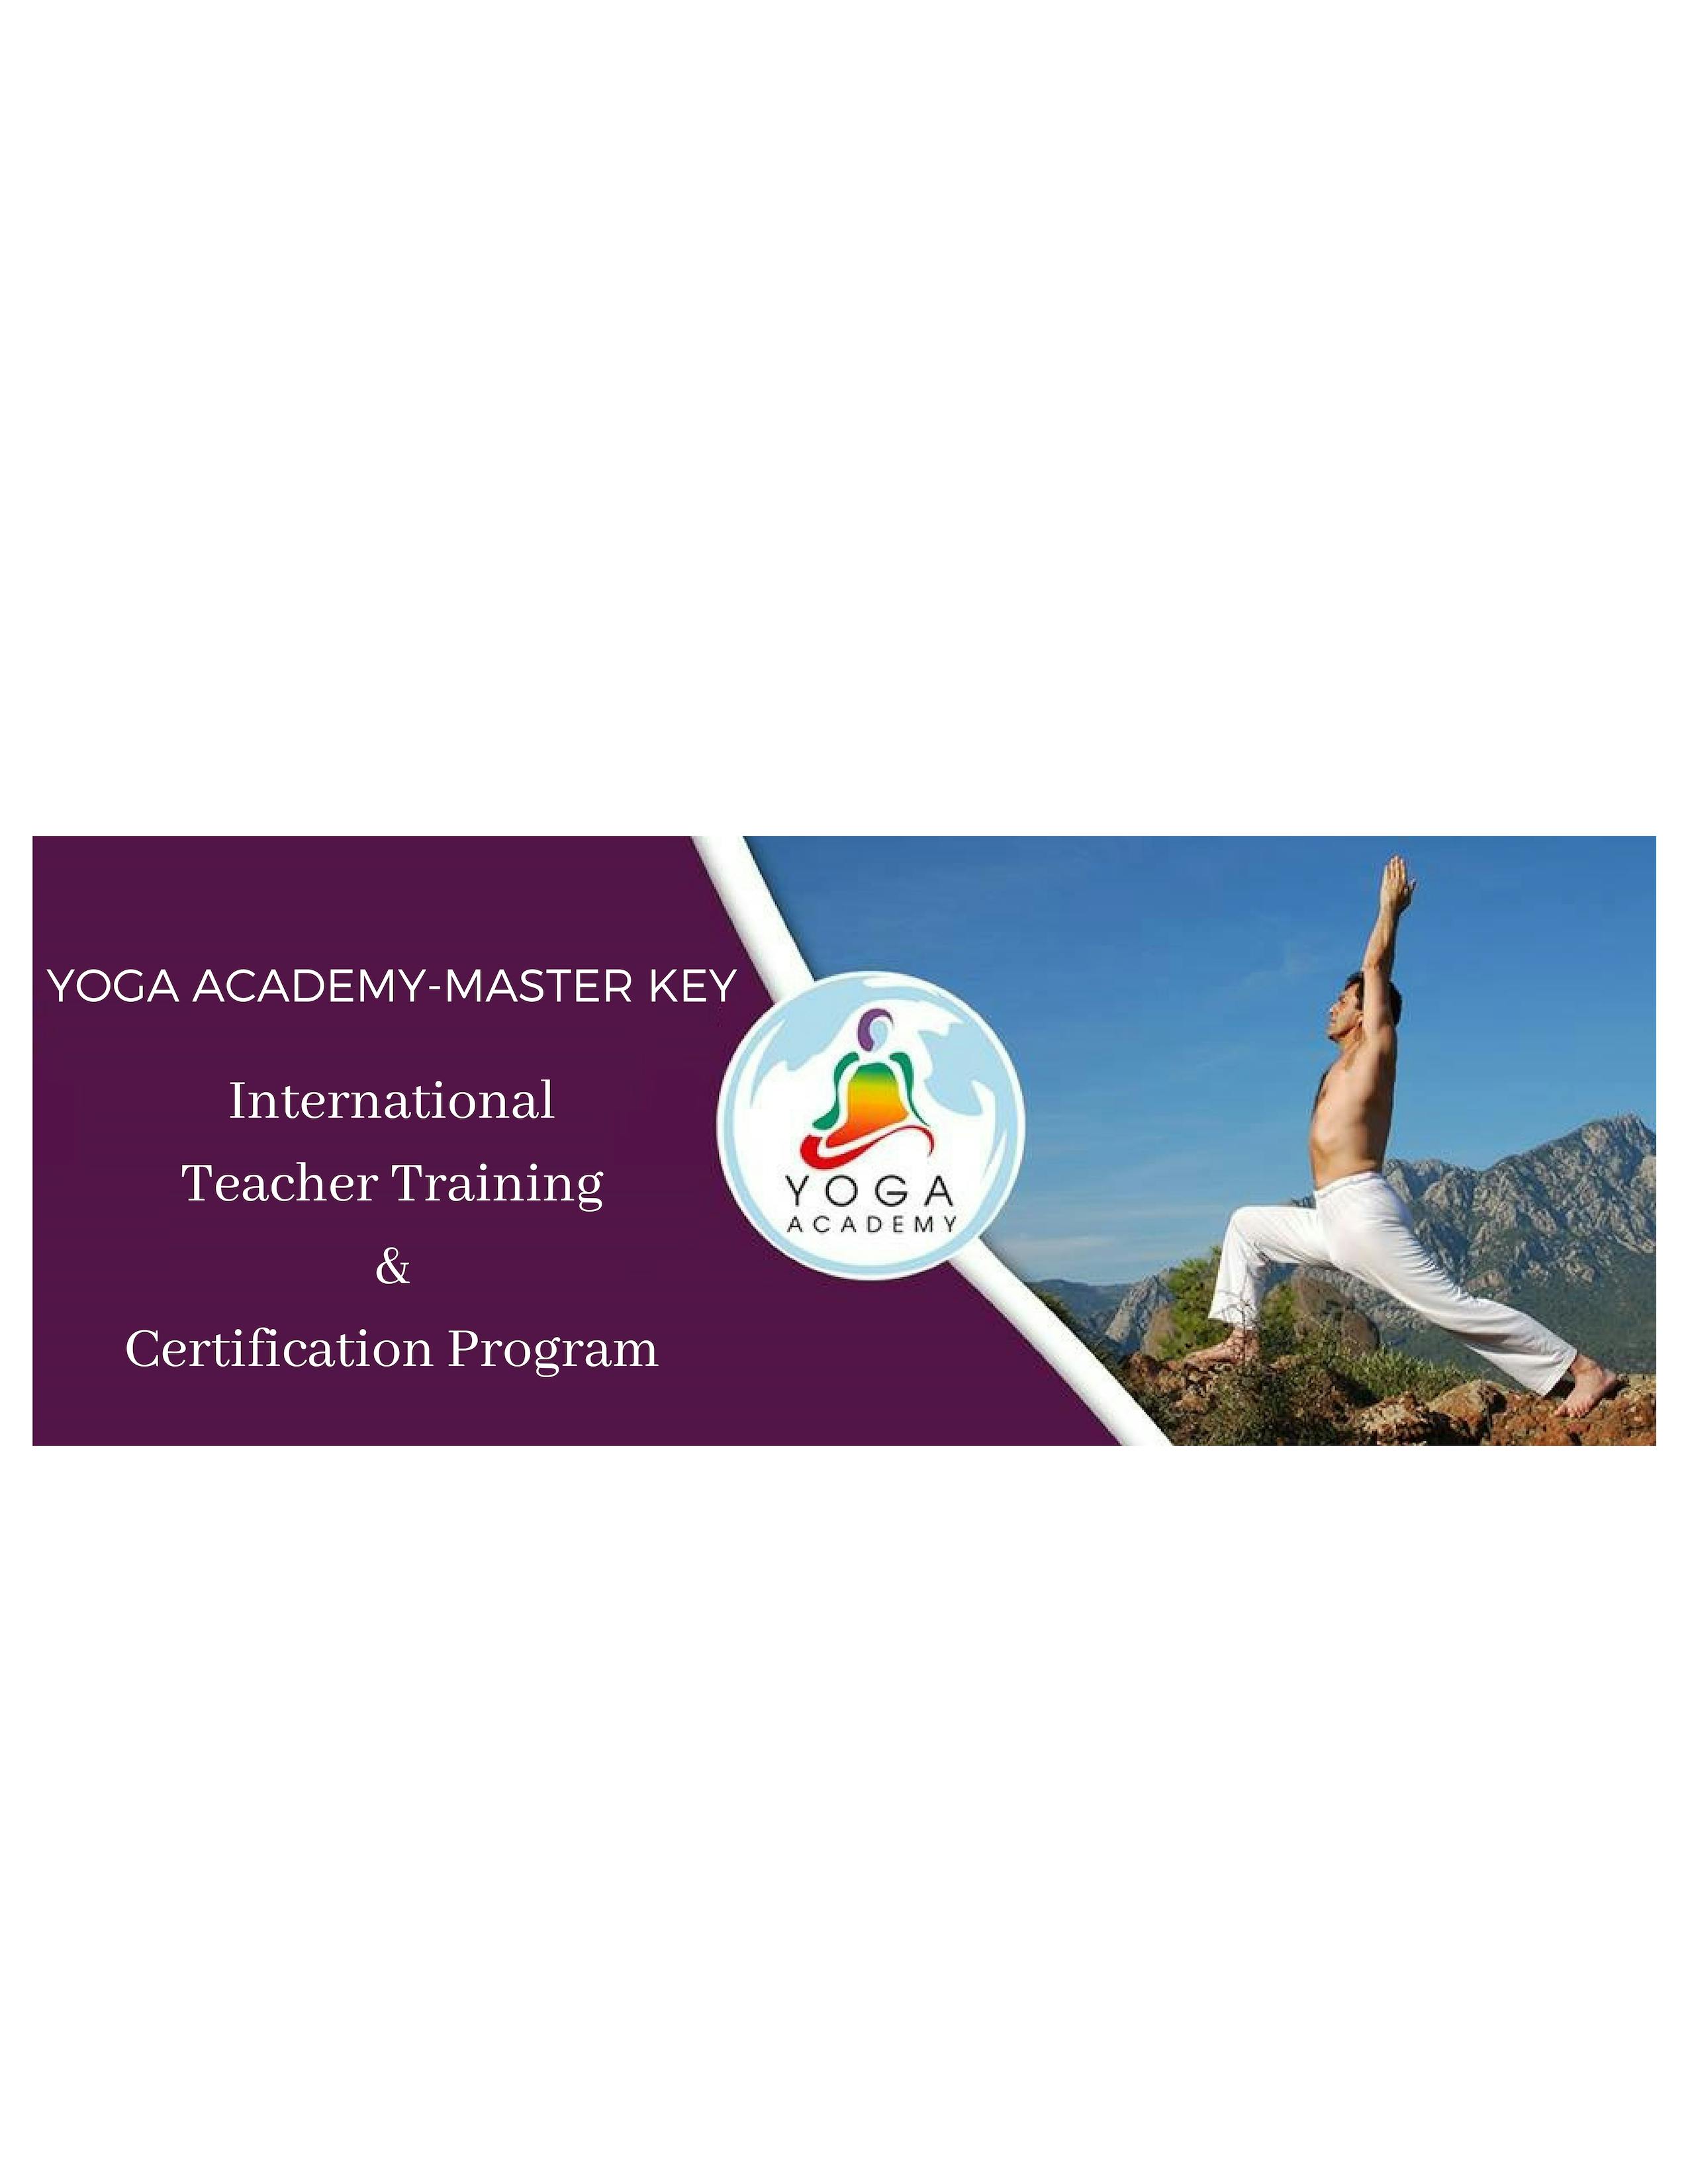 Yoga Academy-Master Key International Teacher Training & Certification Program